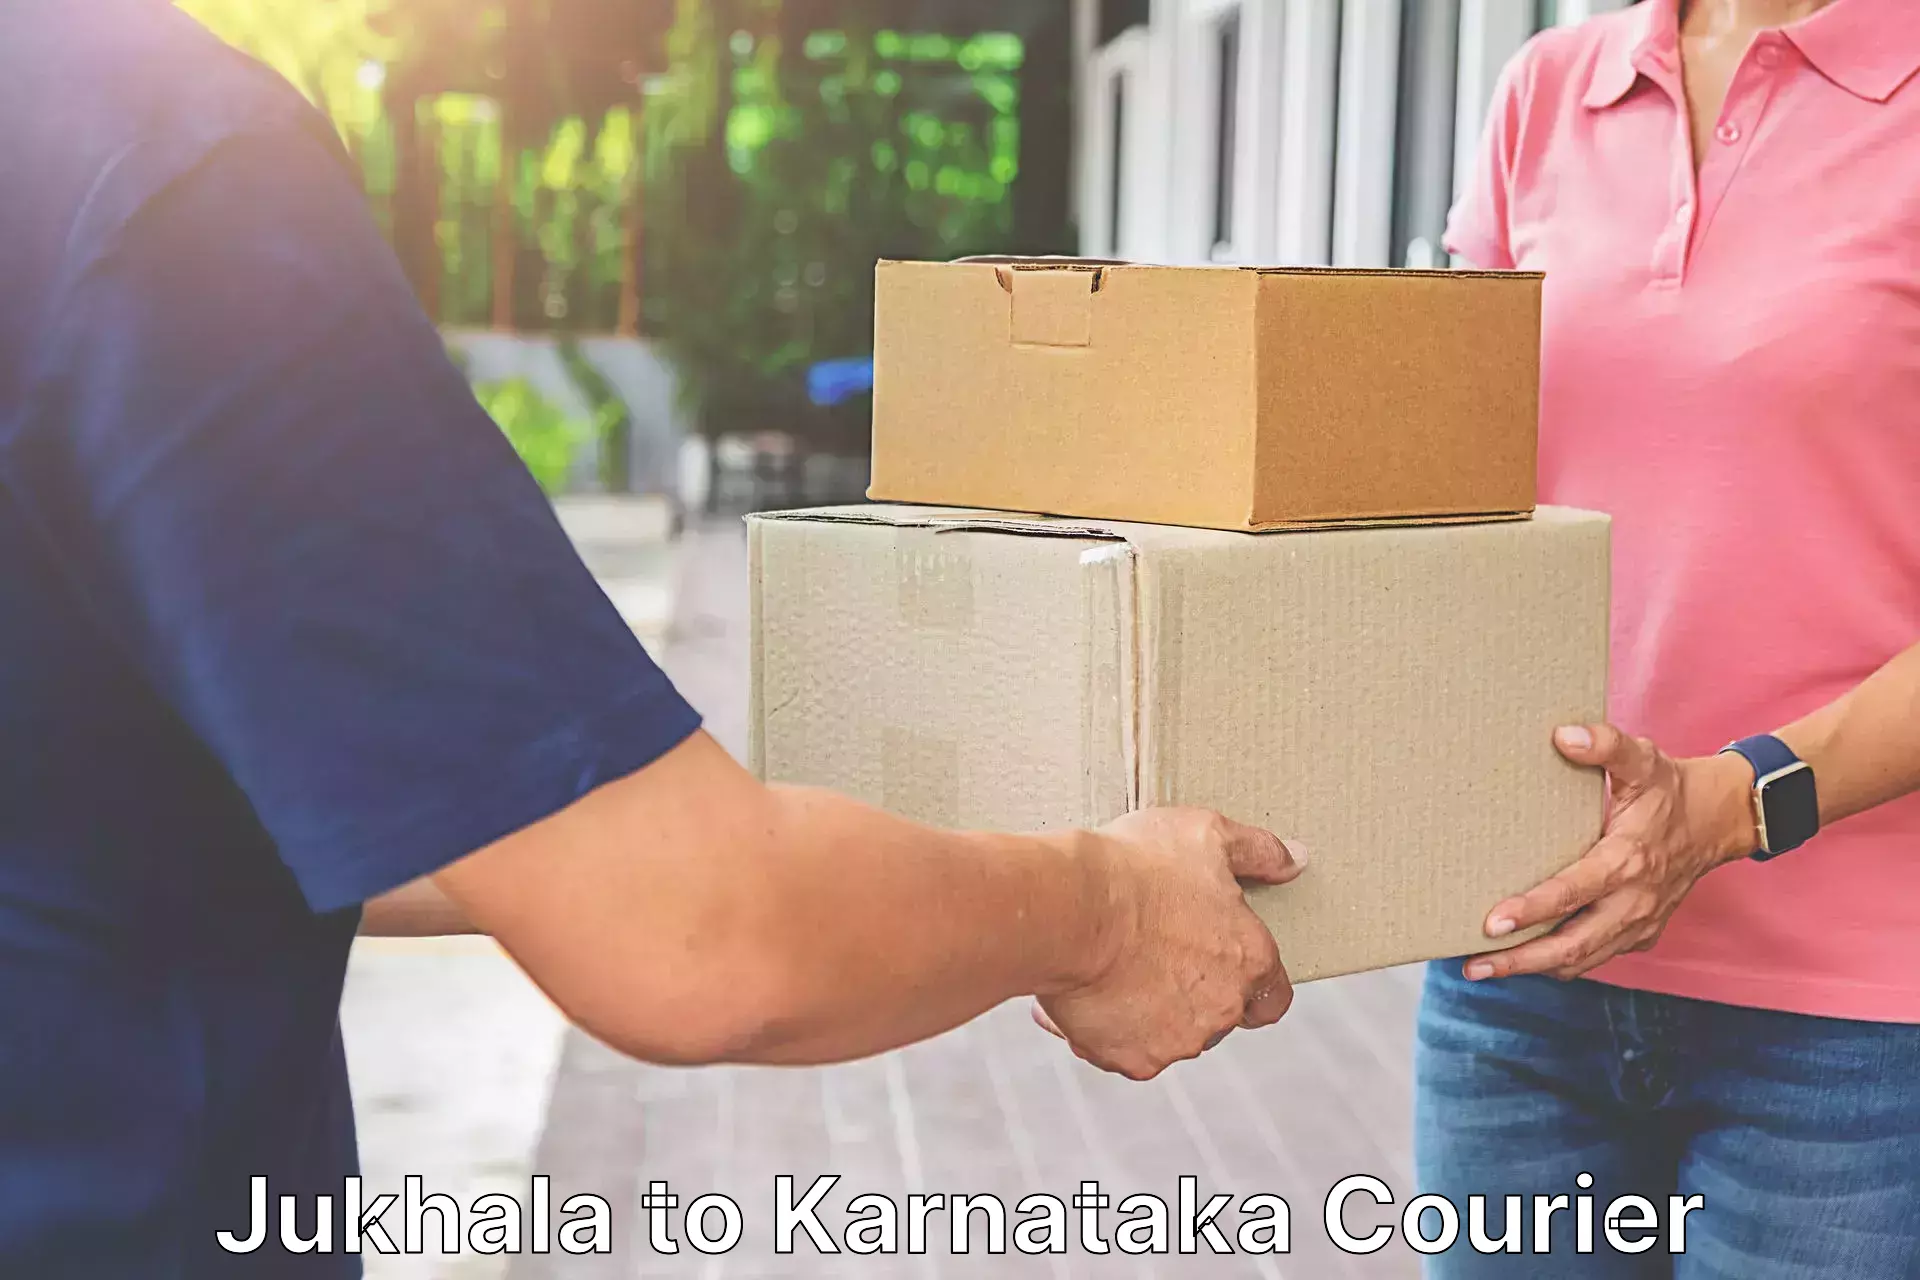 Fast delivery service Jukhala to Karnataka